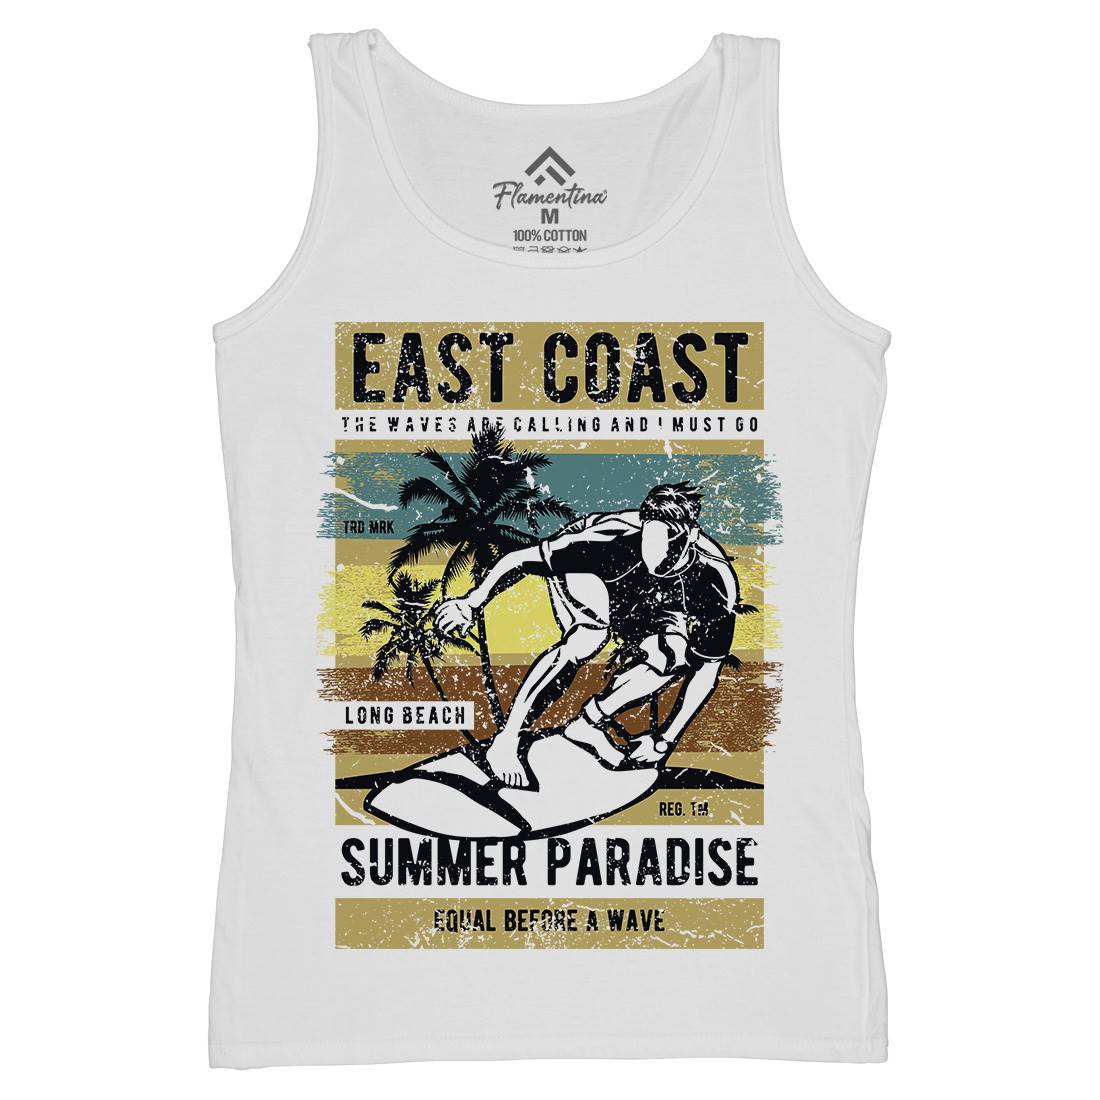 East Coast Surfing Womens Organic Tank Top Vest Surf A648